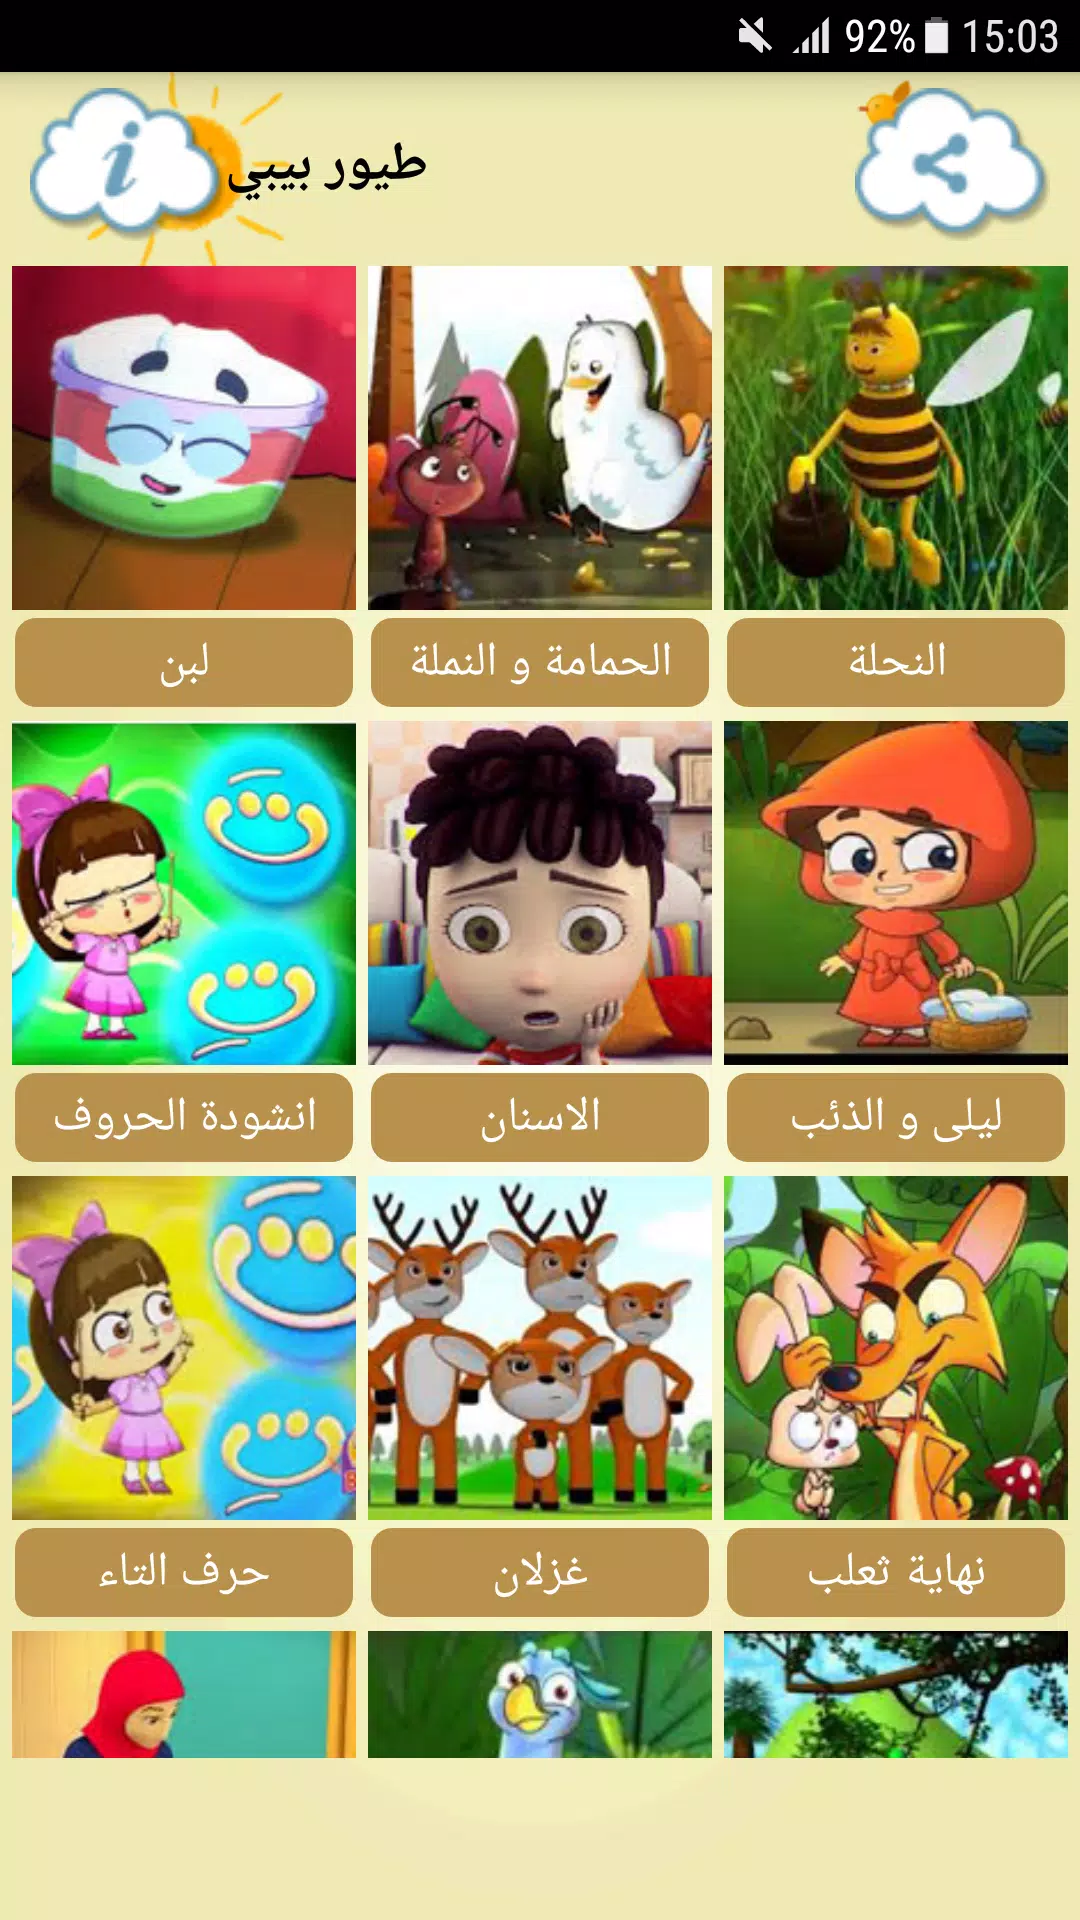 طيور بيي - طيور الجنة -toyor baby - toyor al janah APK for Android Download